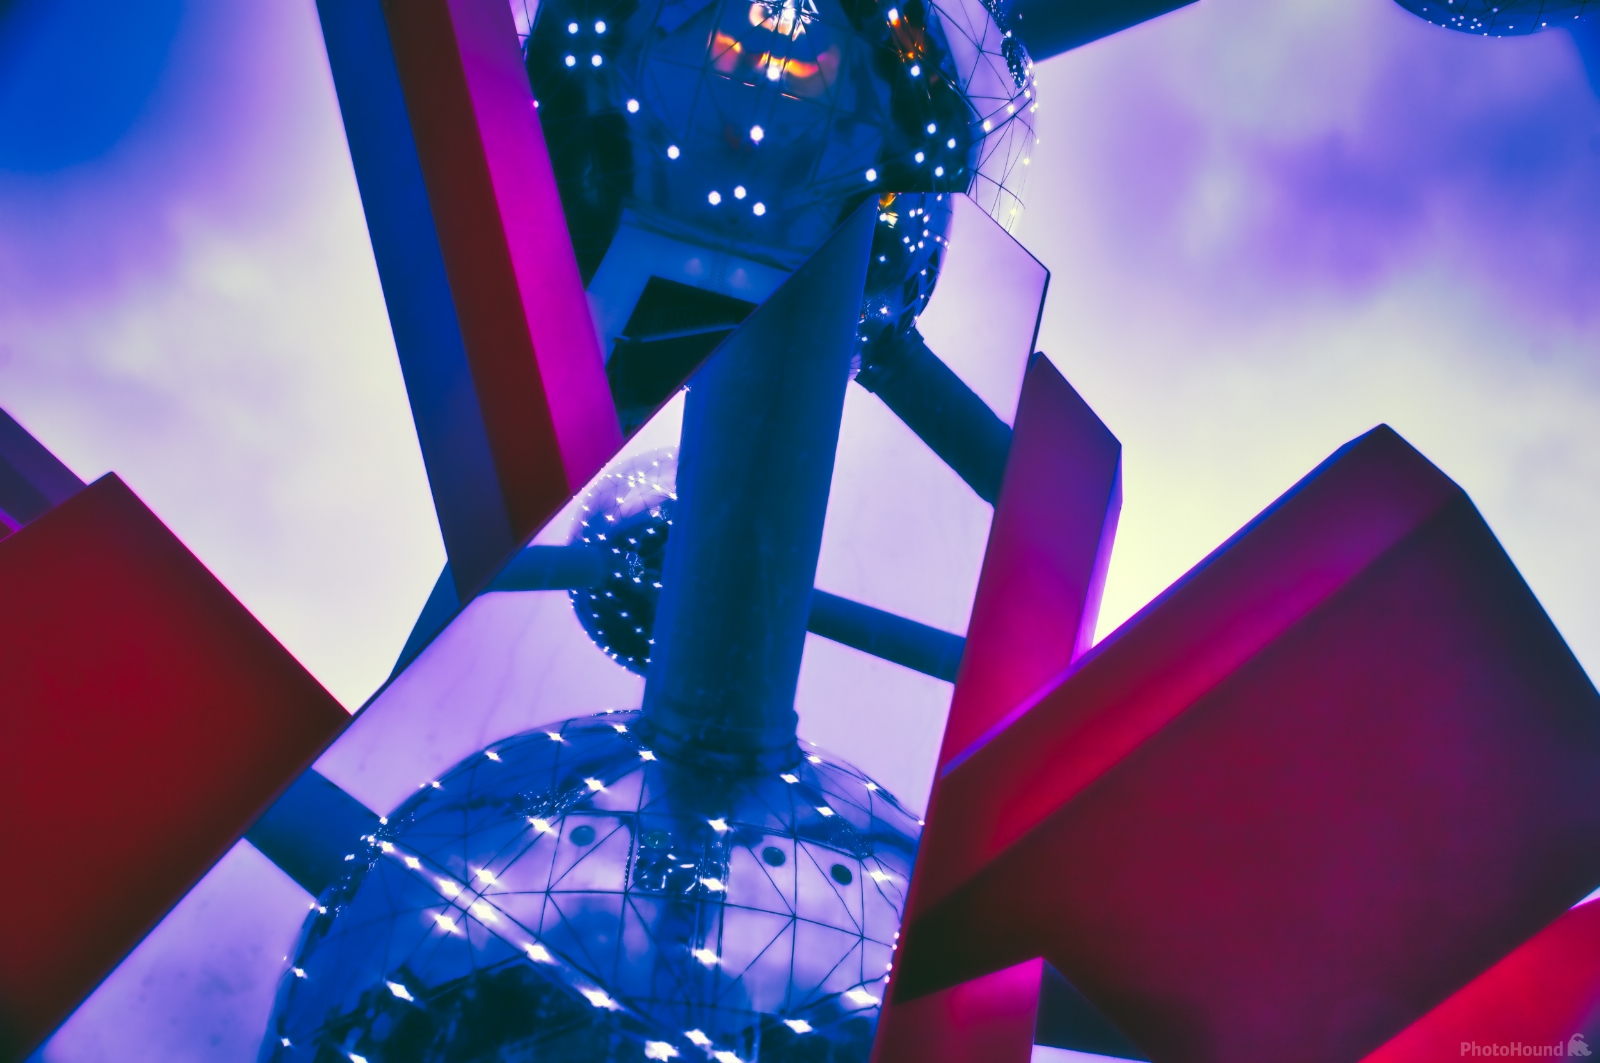 Image of Atomium - Exterior by Gert Lucas